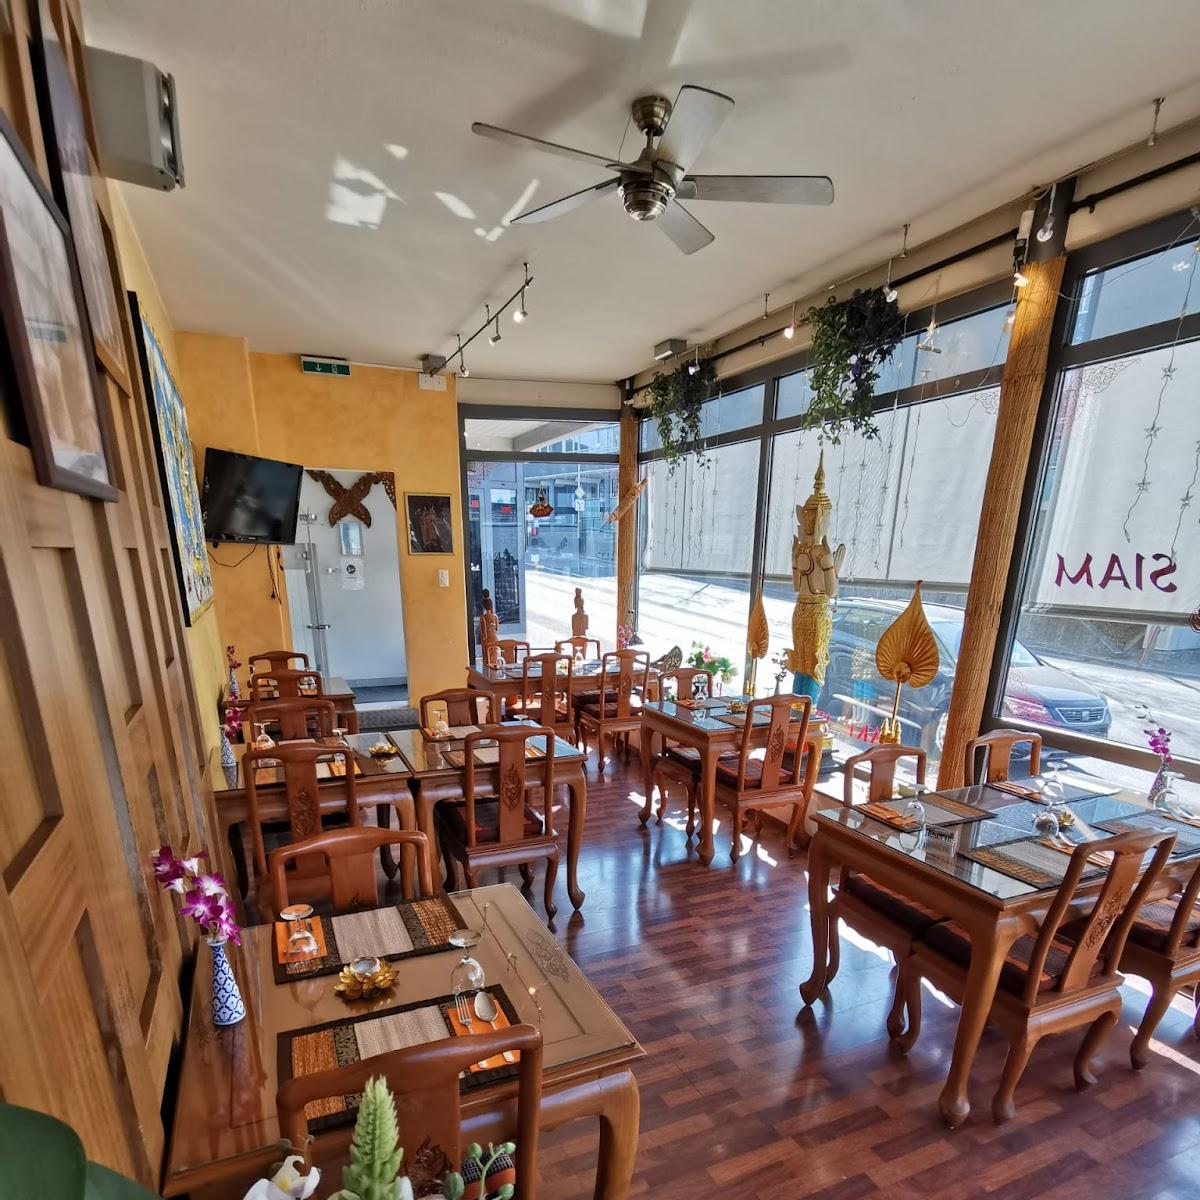 Restaurant "Ruan Siam" in Baar